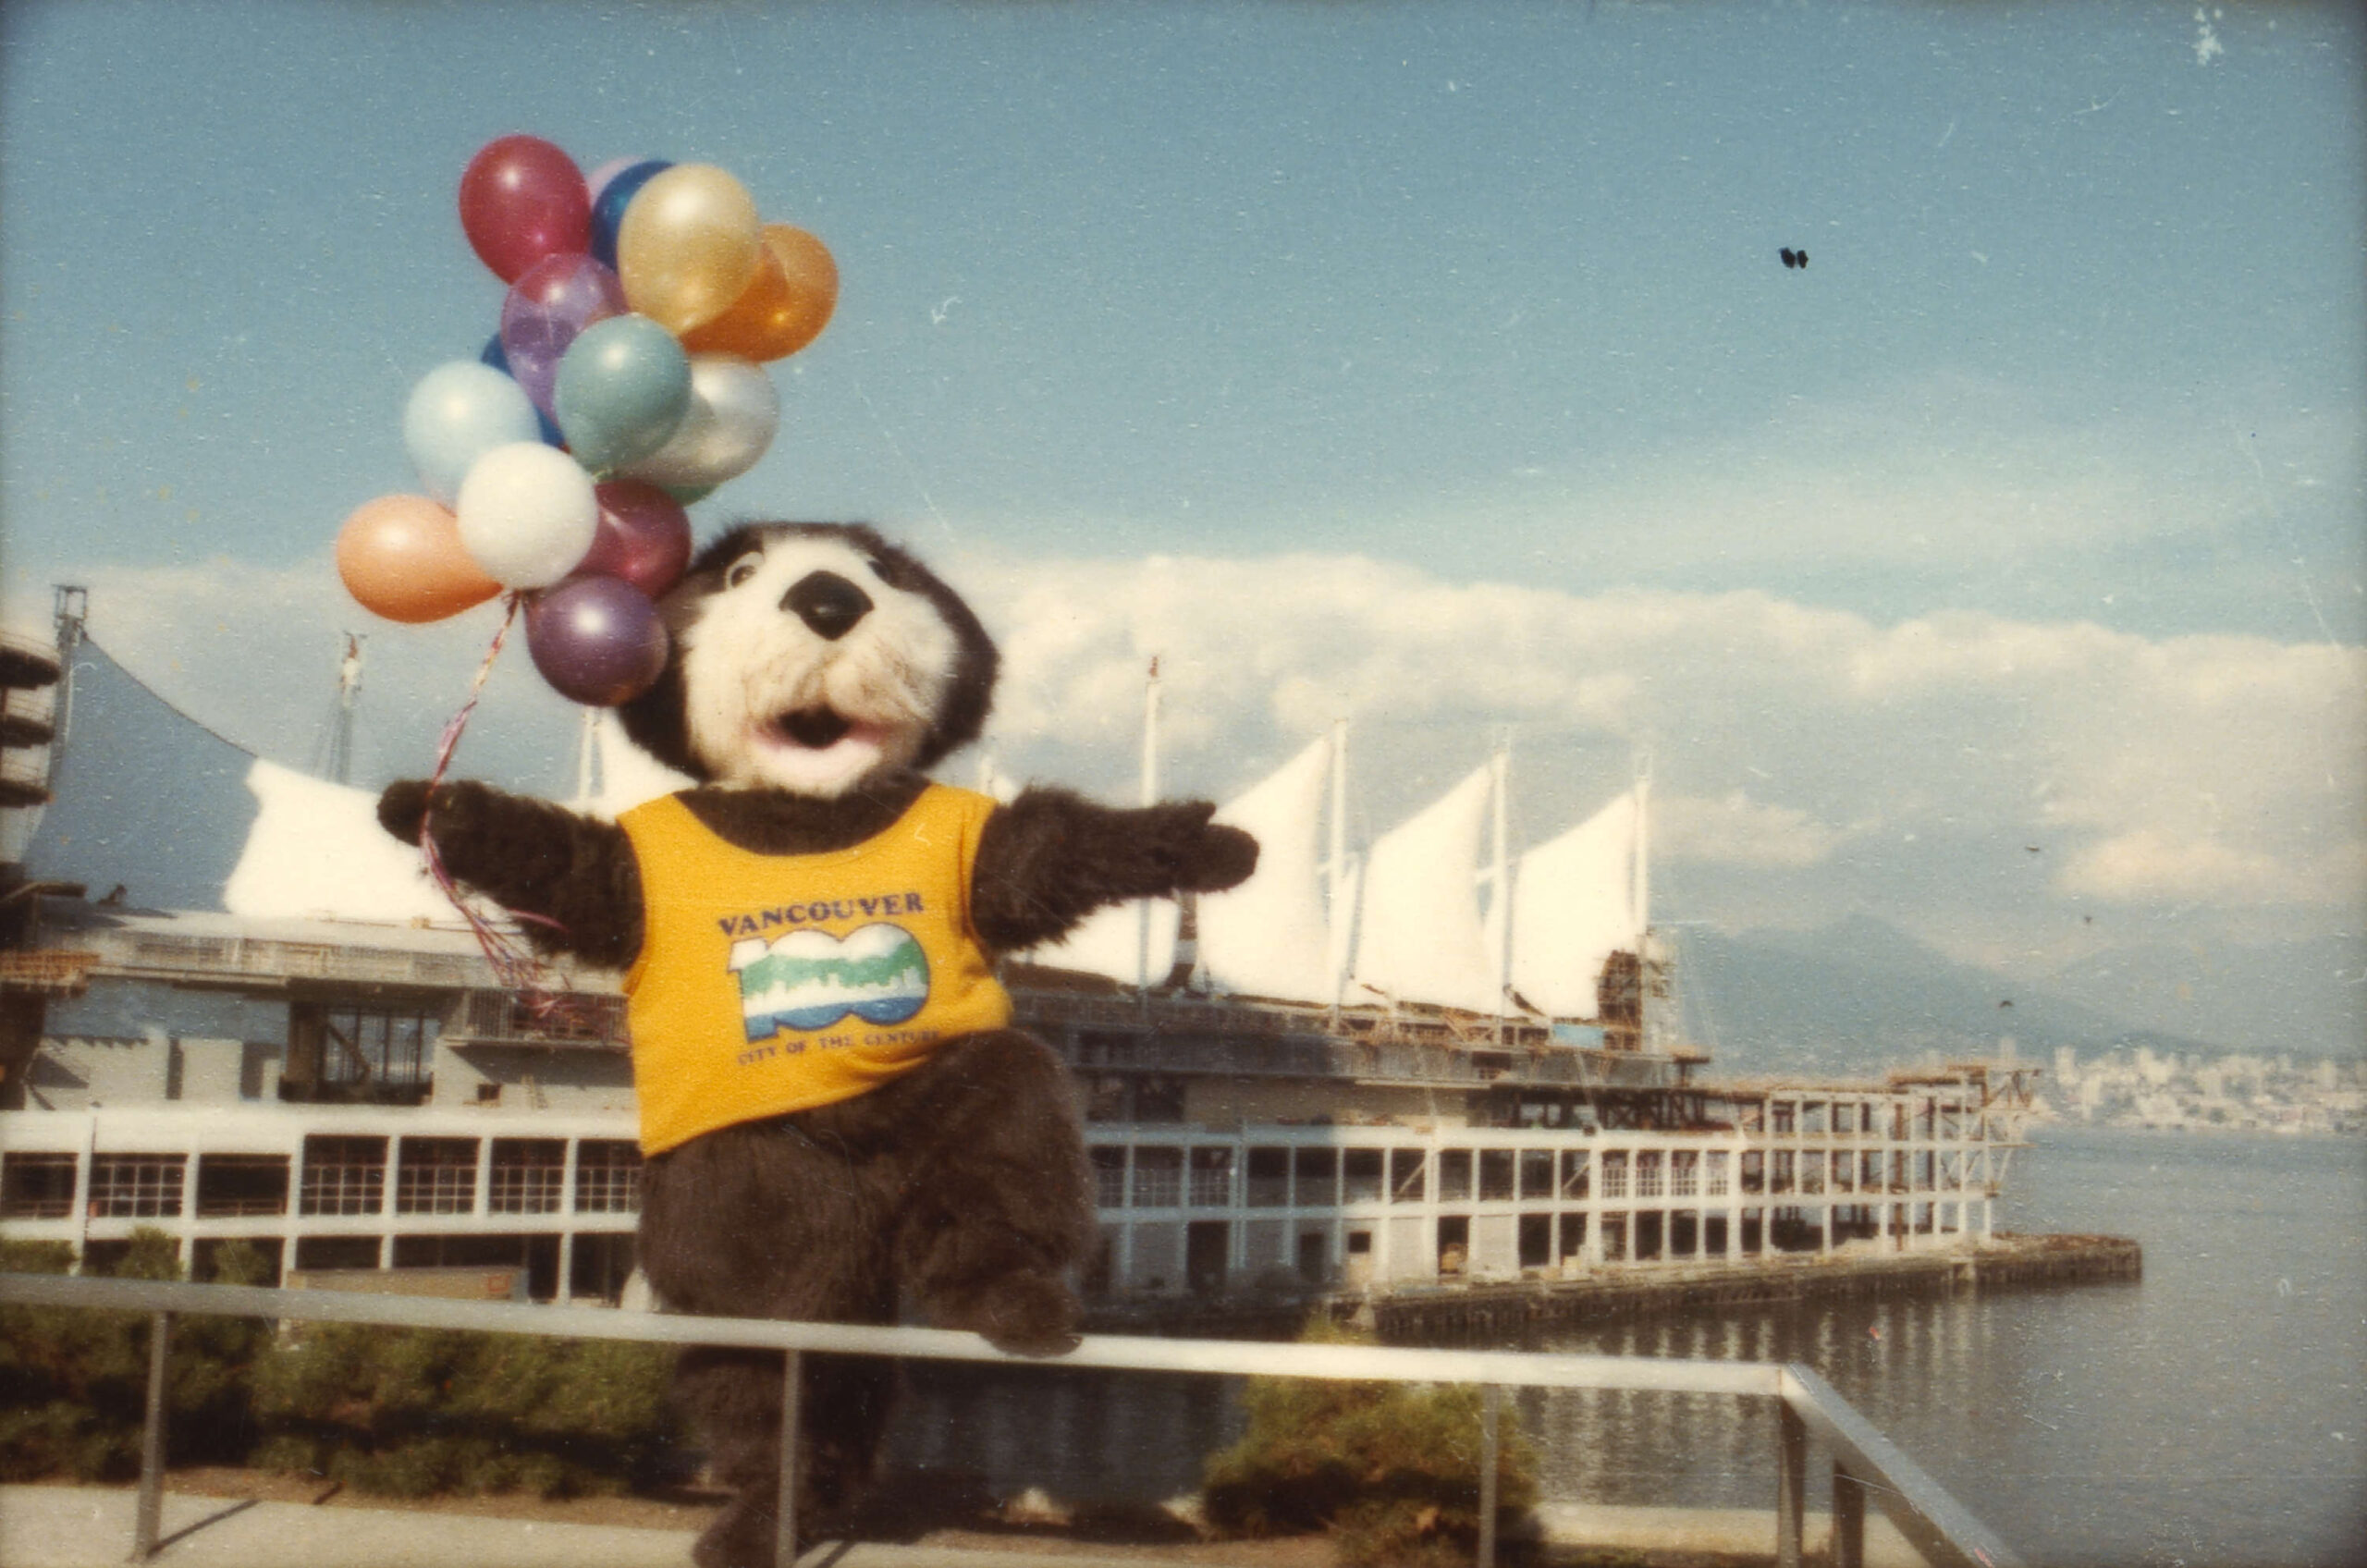 Tillicum, Vancouver’s Centennial mascot. Reference Code: AM1576-S6-12-F42-: 2011-010.1945-: 2011-010.1945.04